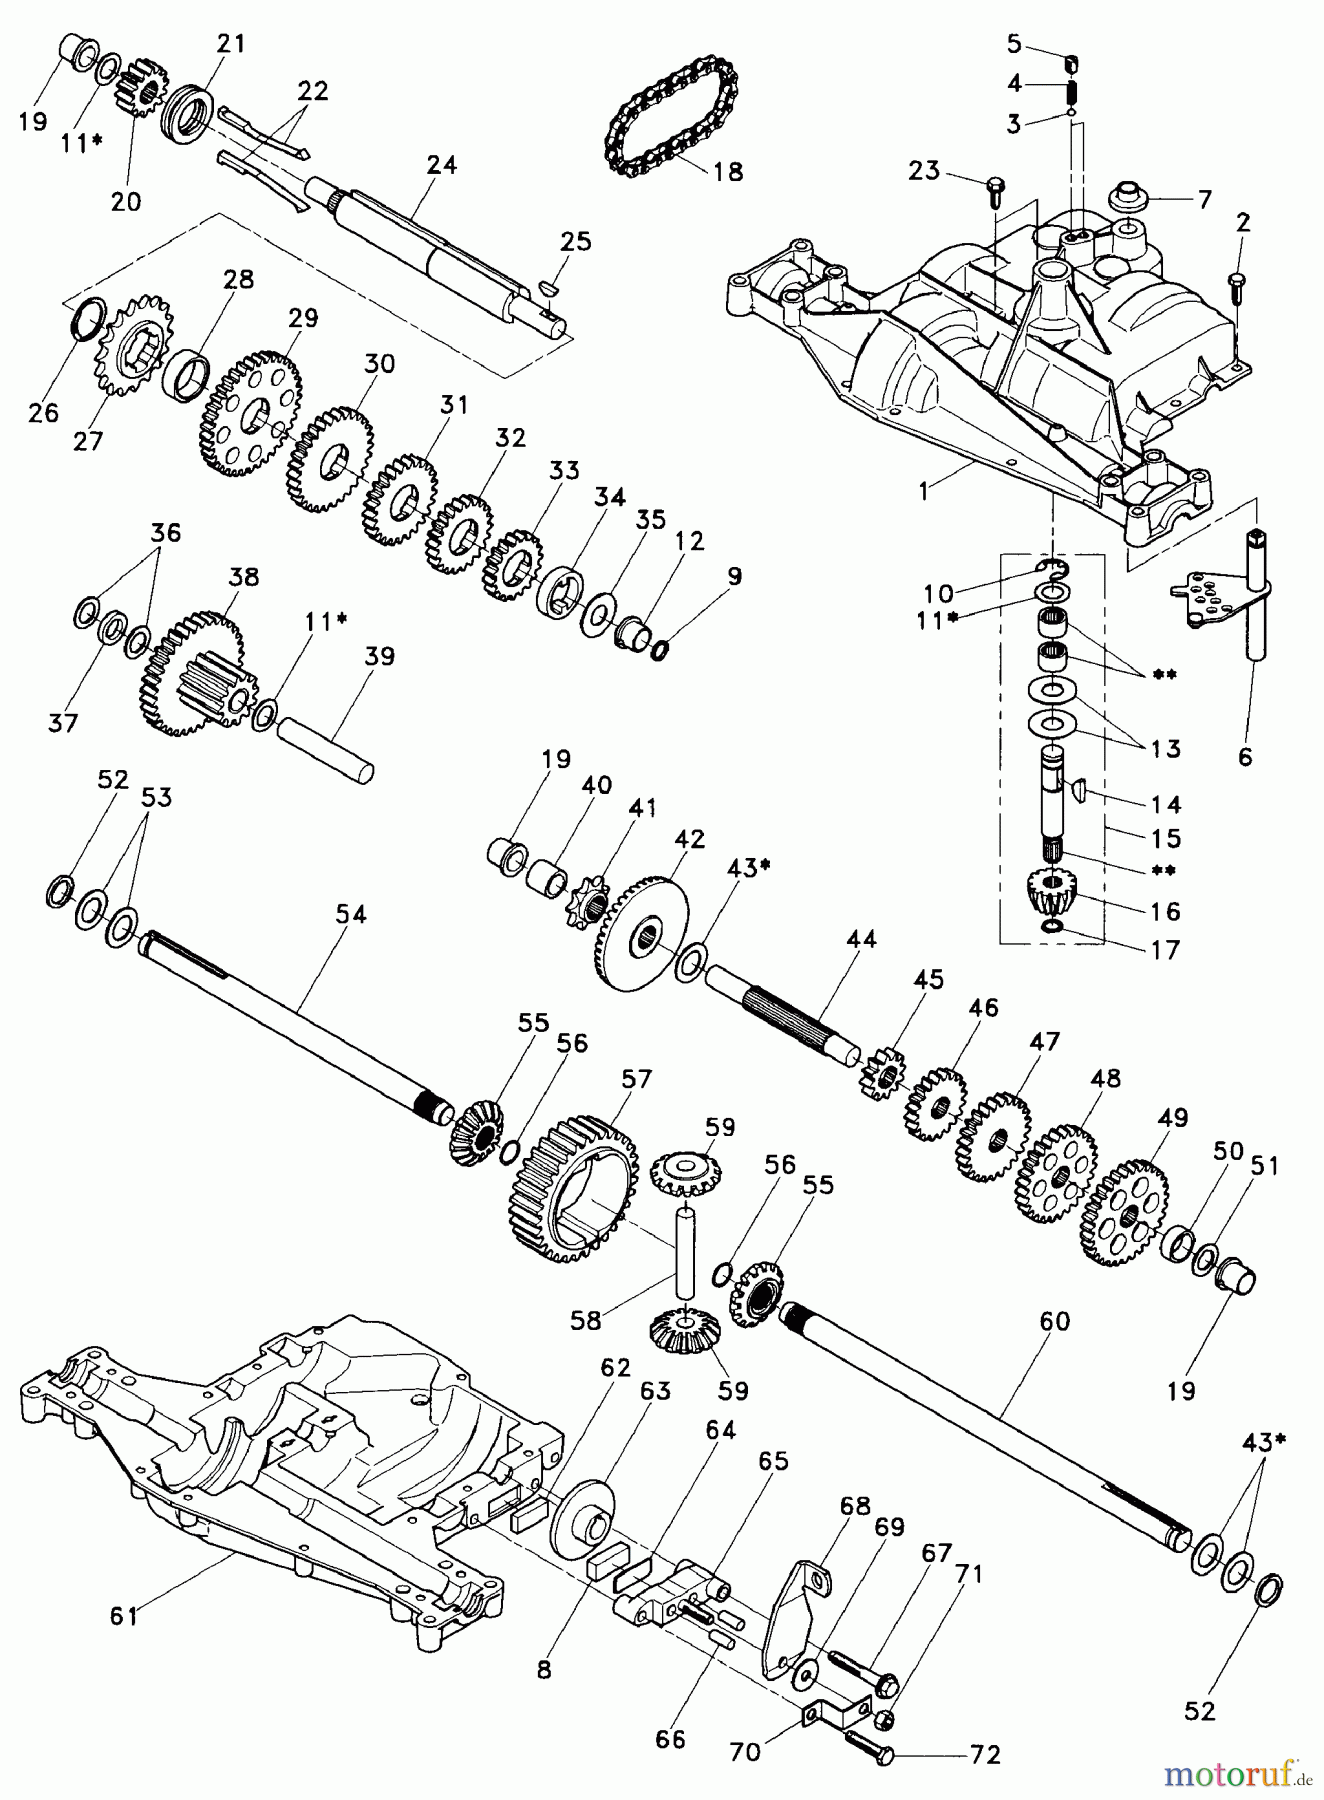  Husqvarna Rasen und Garten Traktoren LR 120 (954830051A) - Husqvarna Lawn Tractor (1995-08 & After) Dana Transaxle (Model No. 4360-78)